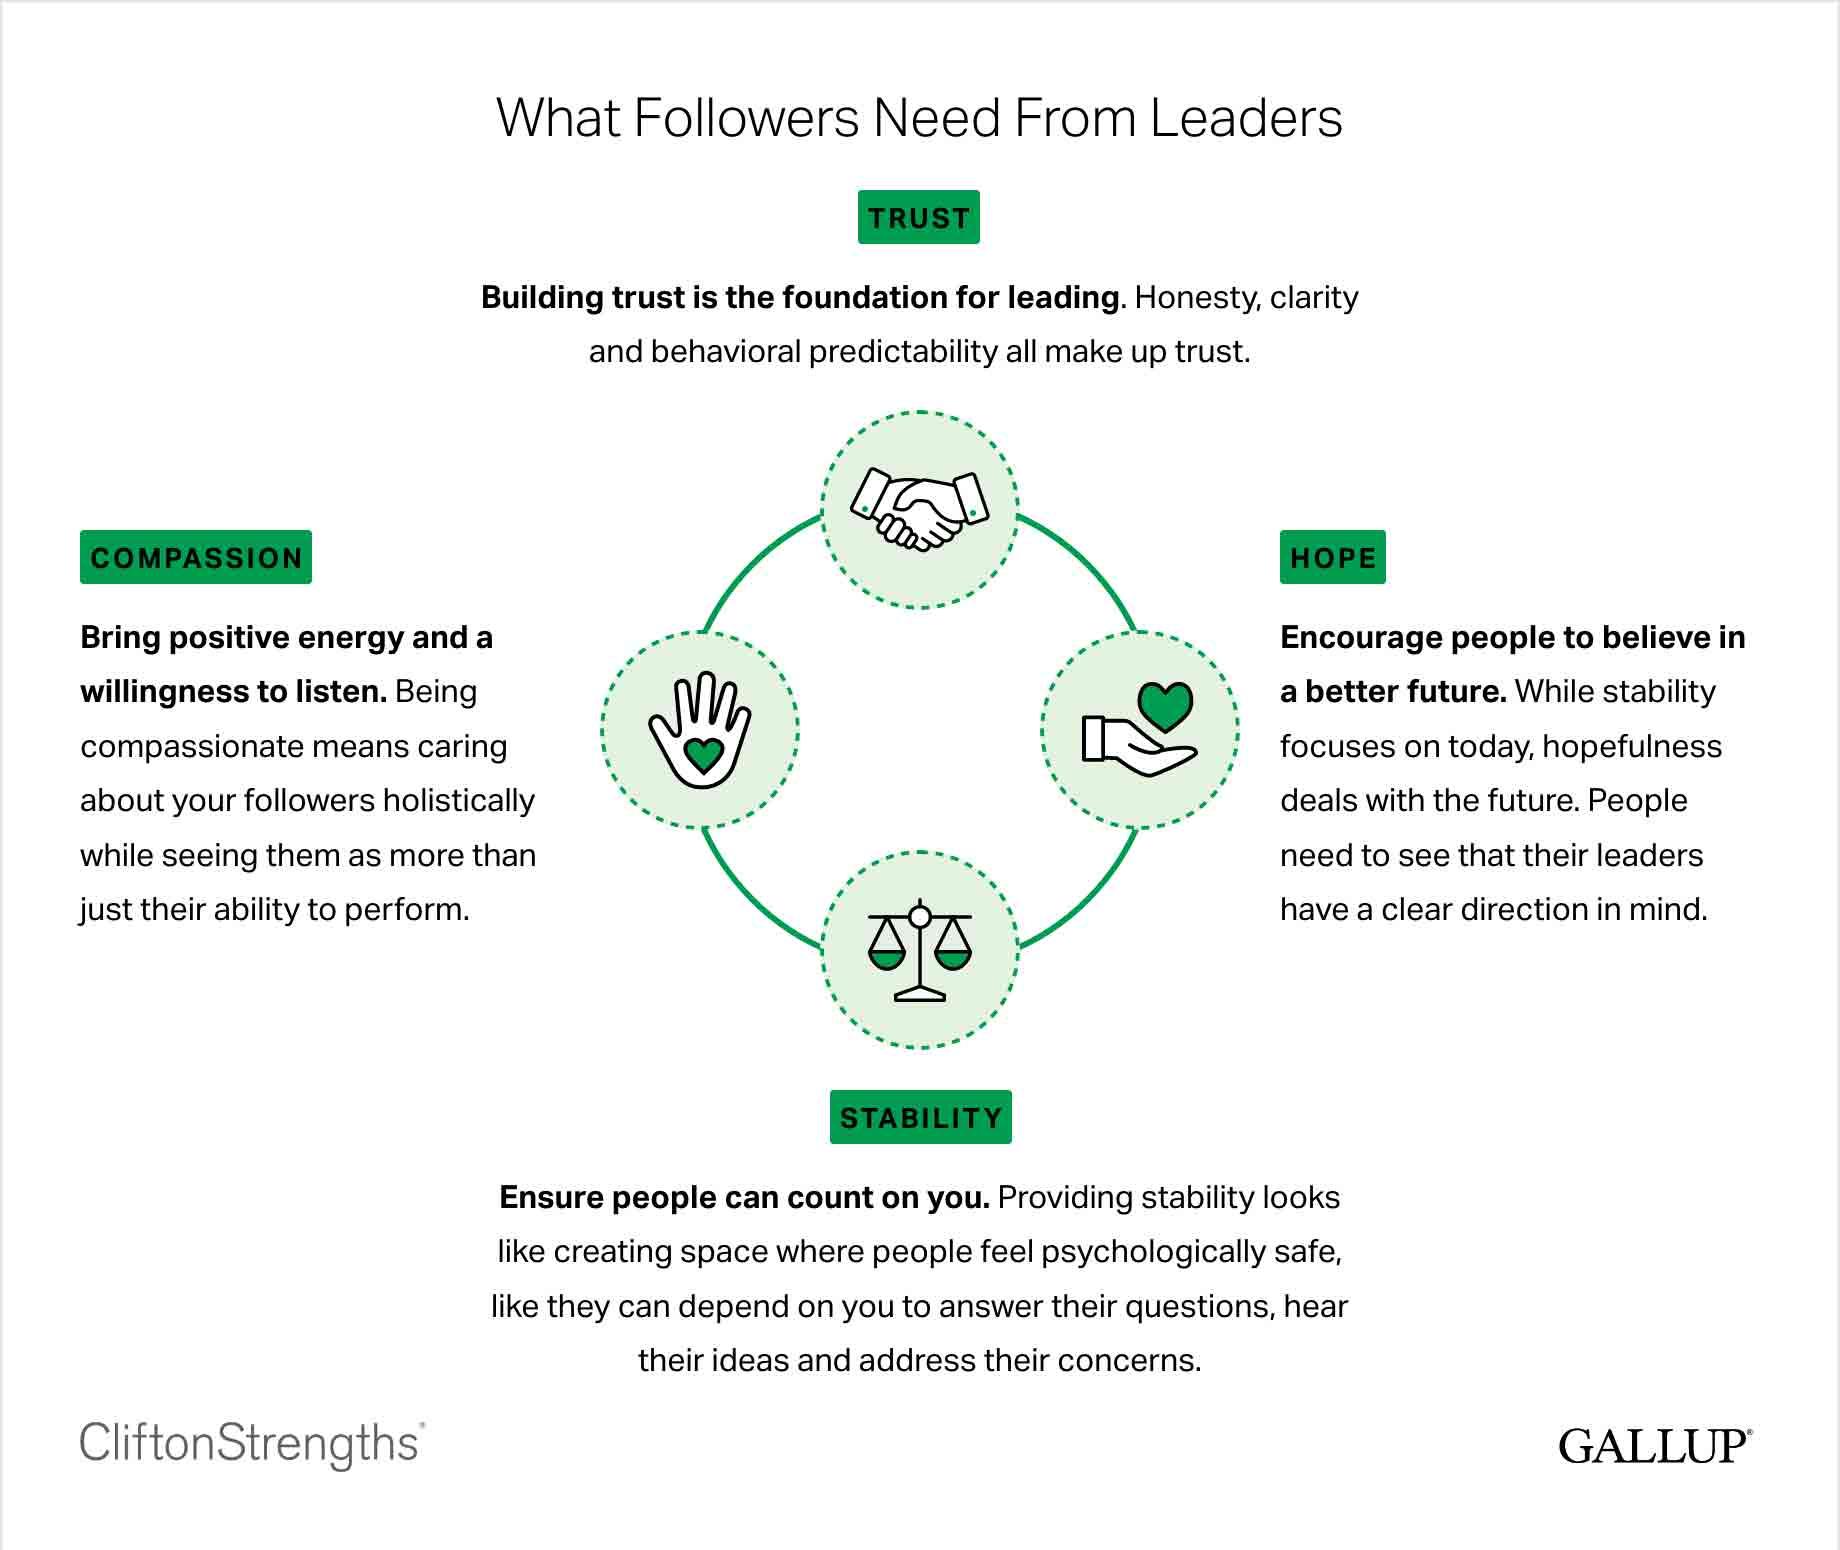 Global Leadership Tips: What Global Leaders Need to Remember